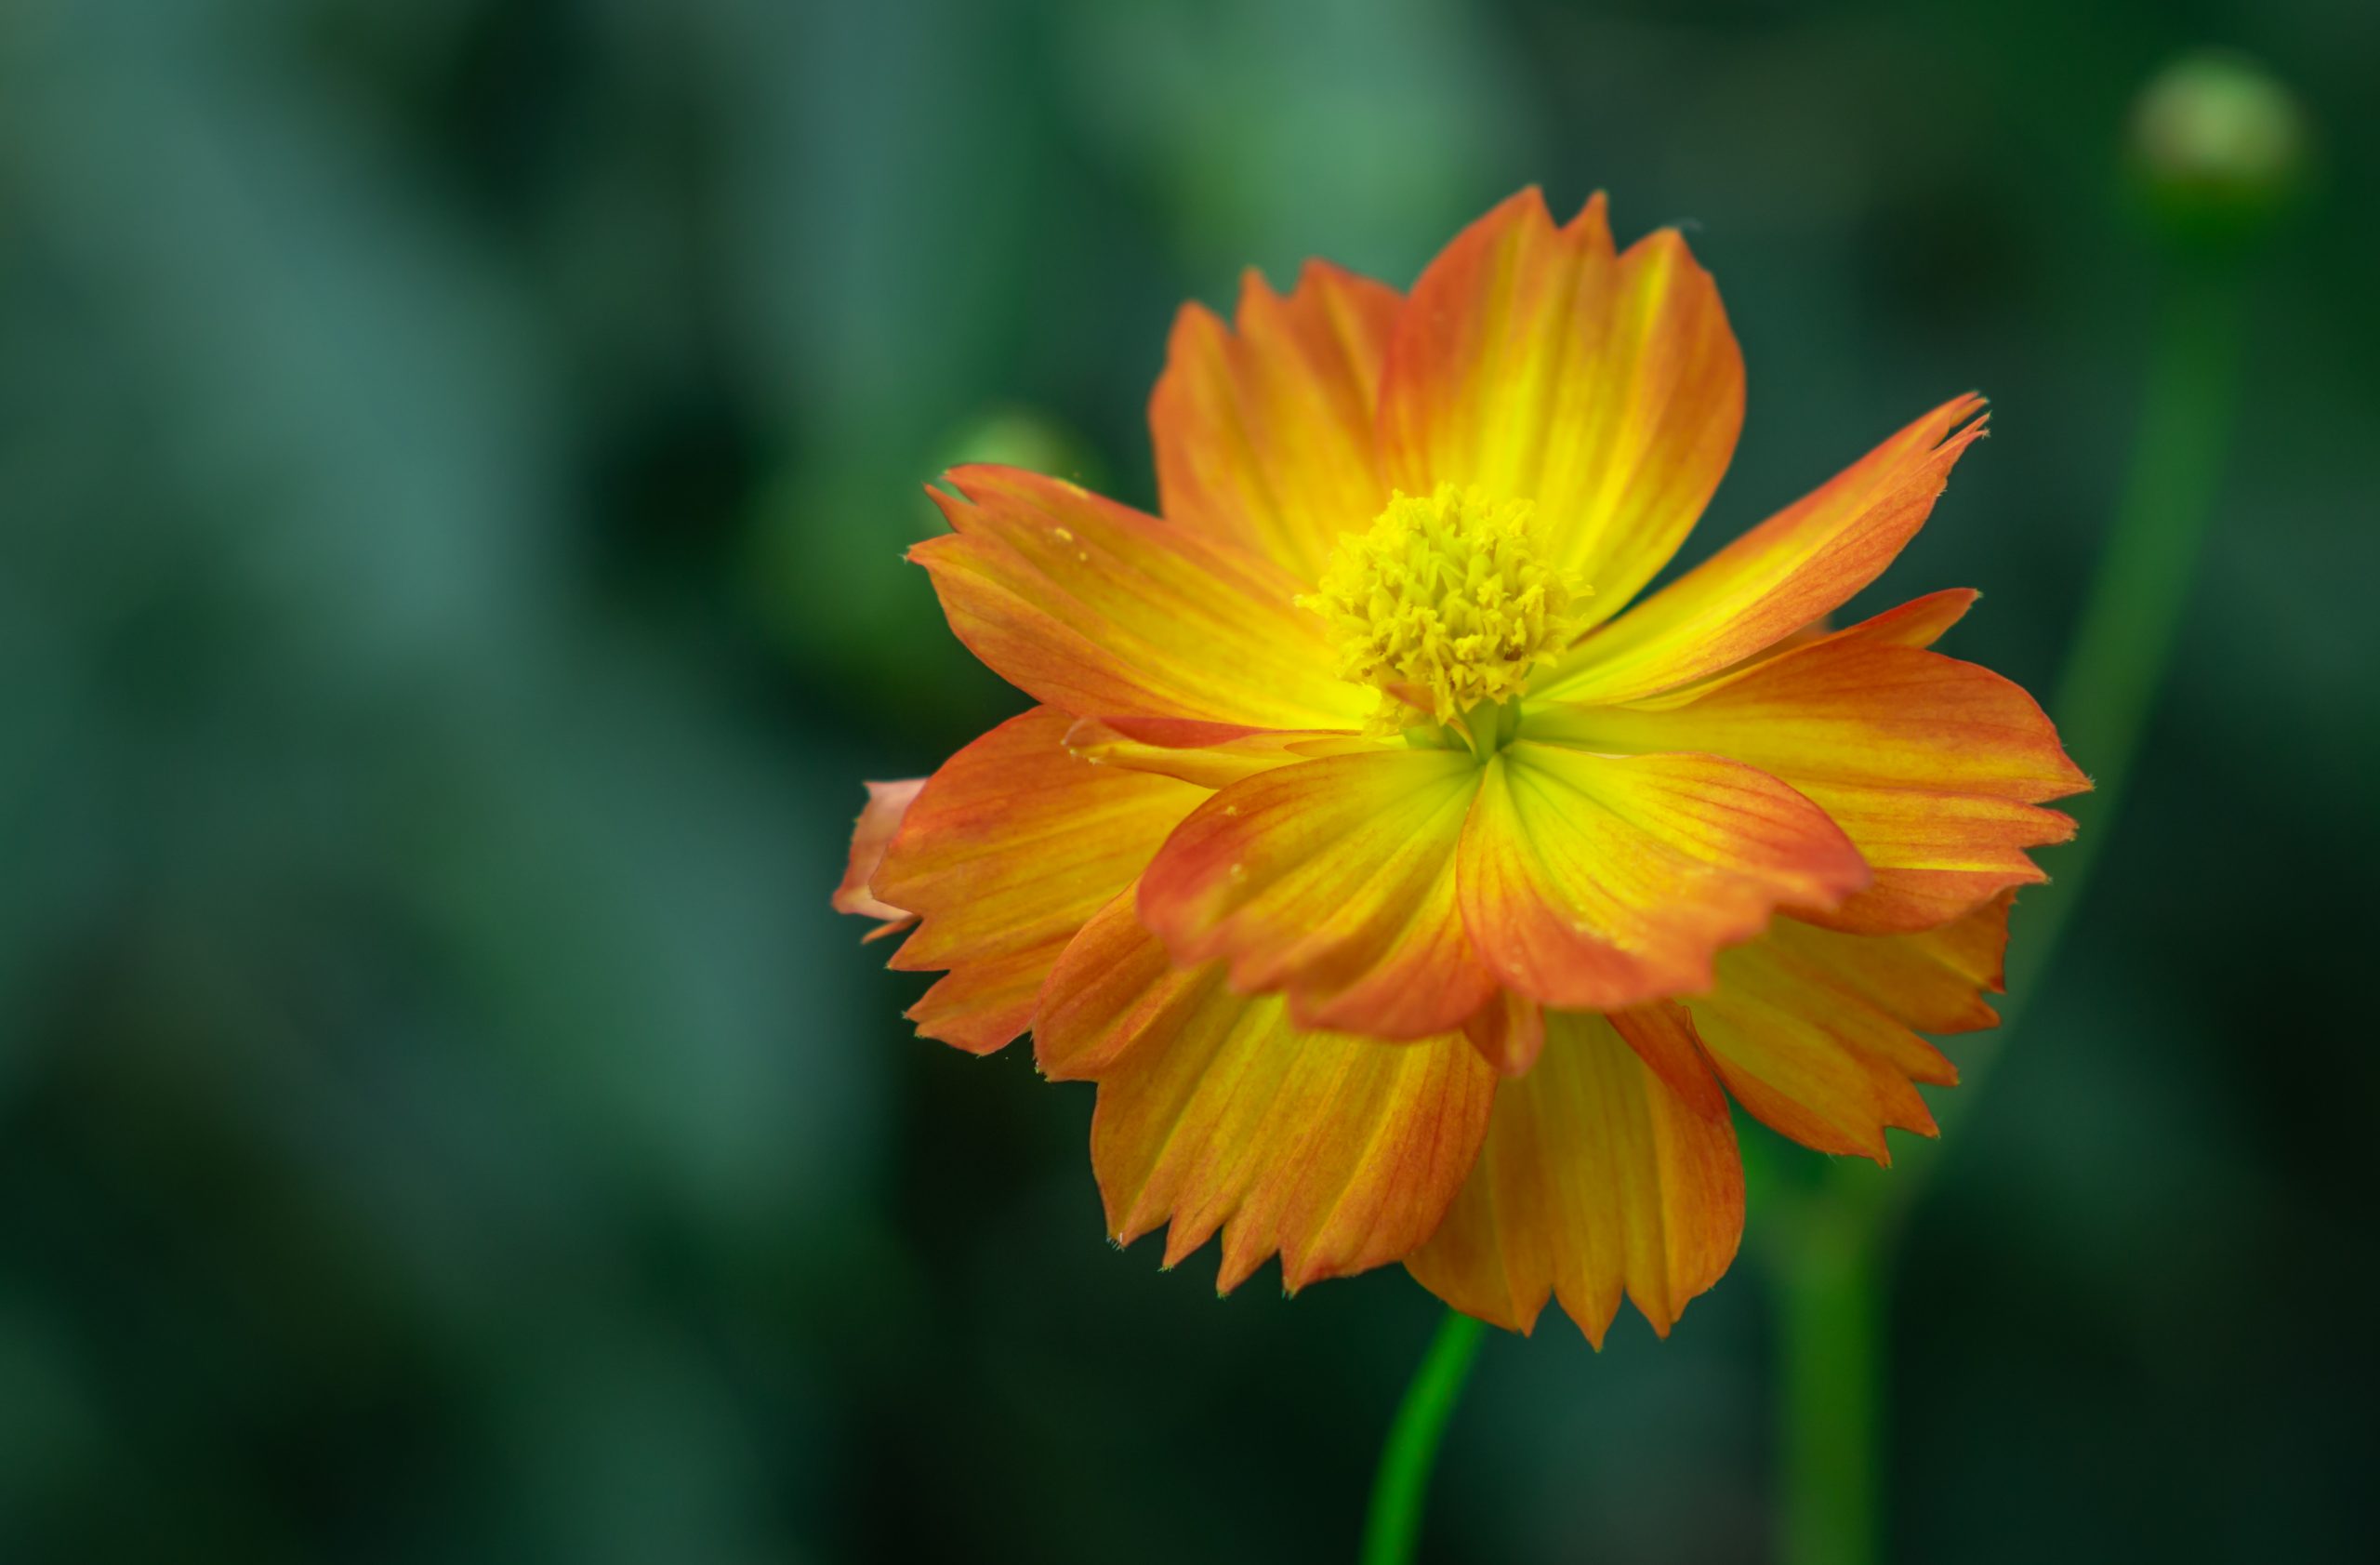 Yellow cosmos flower